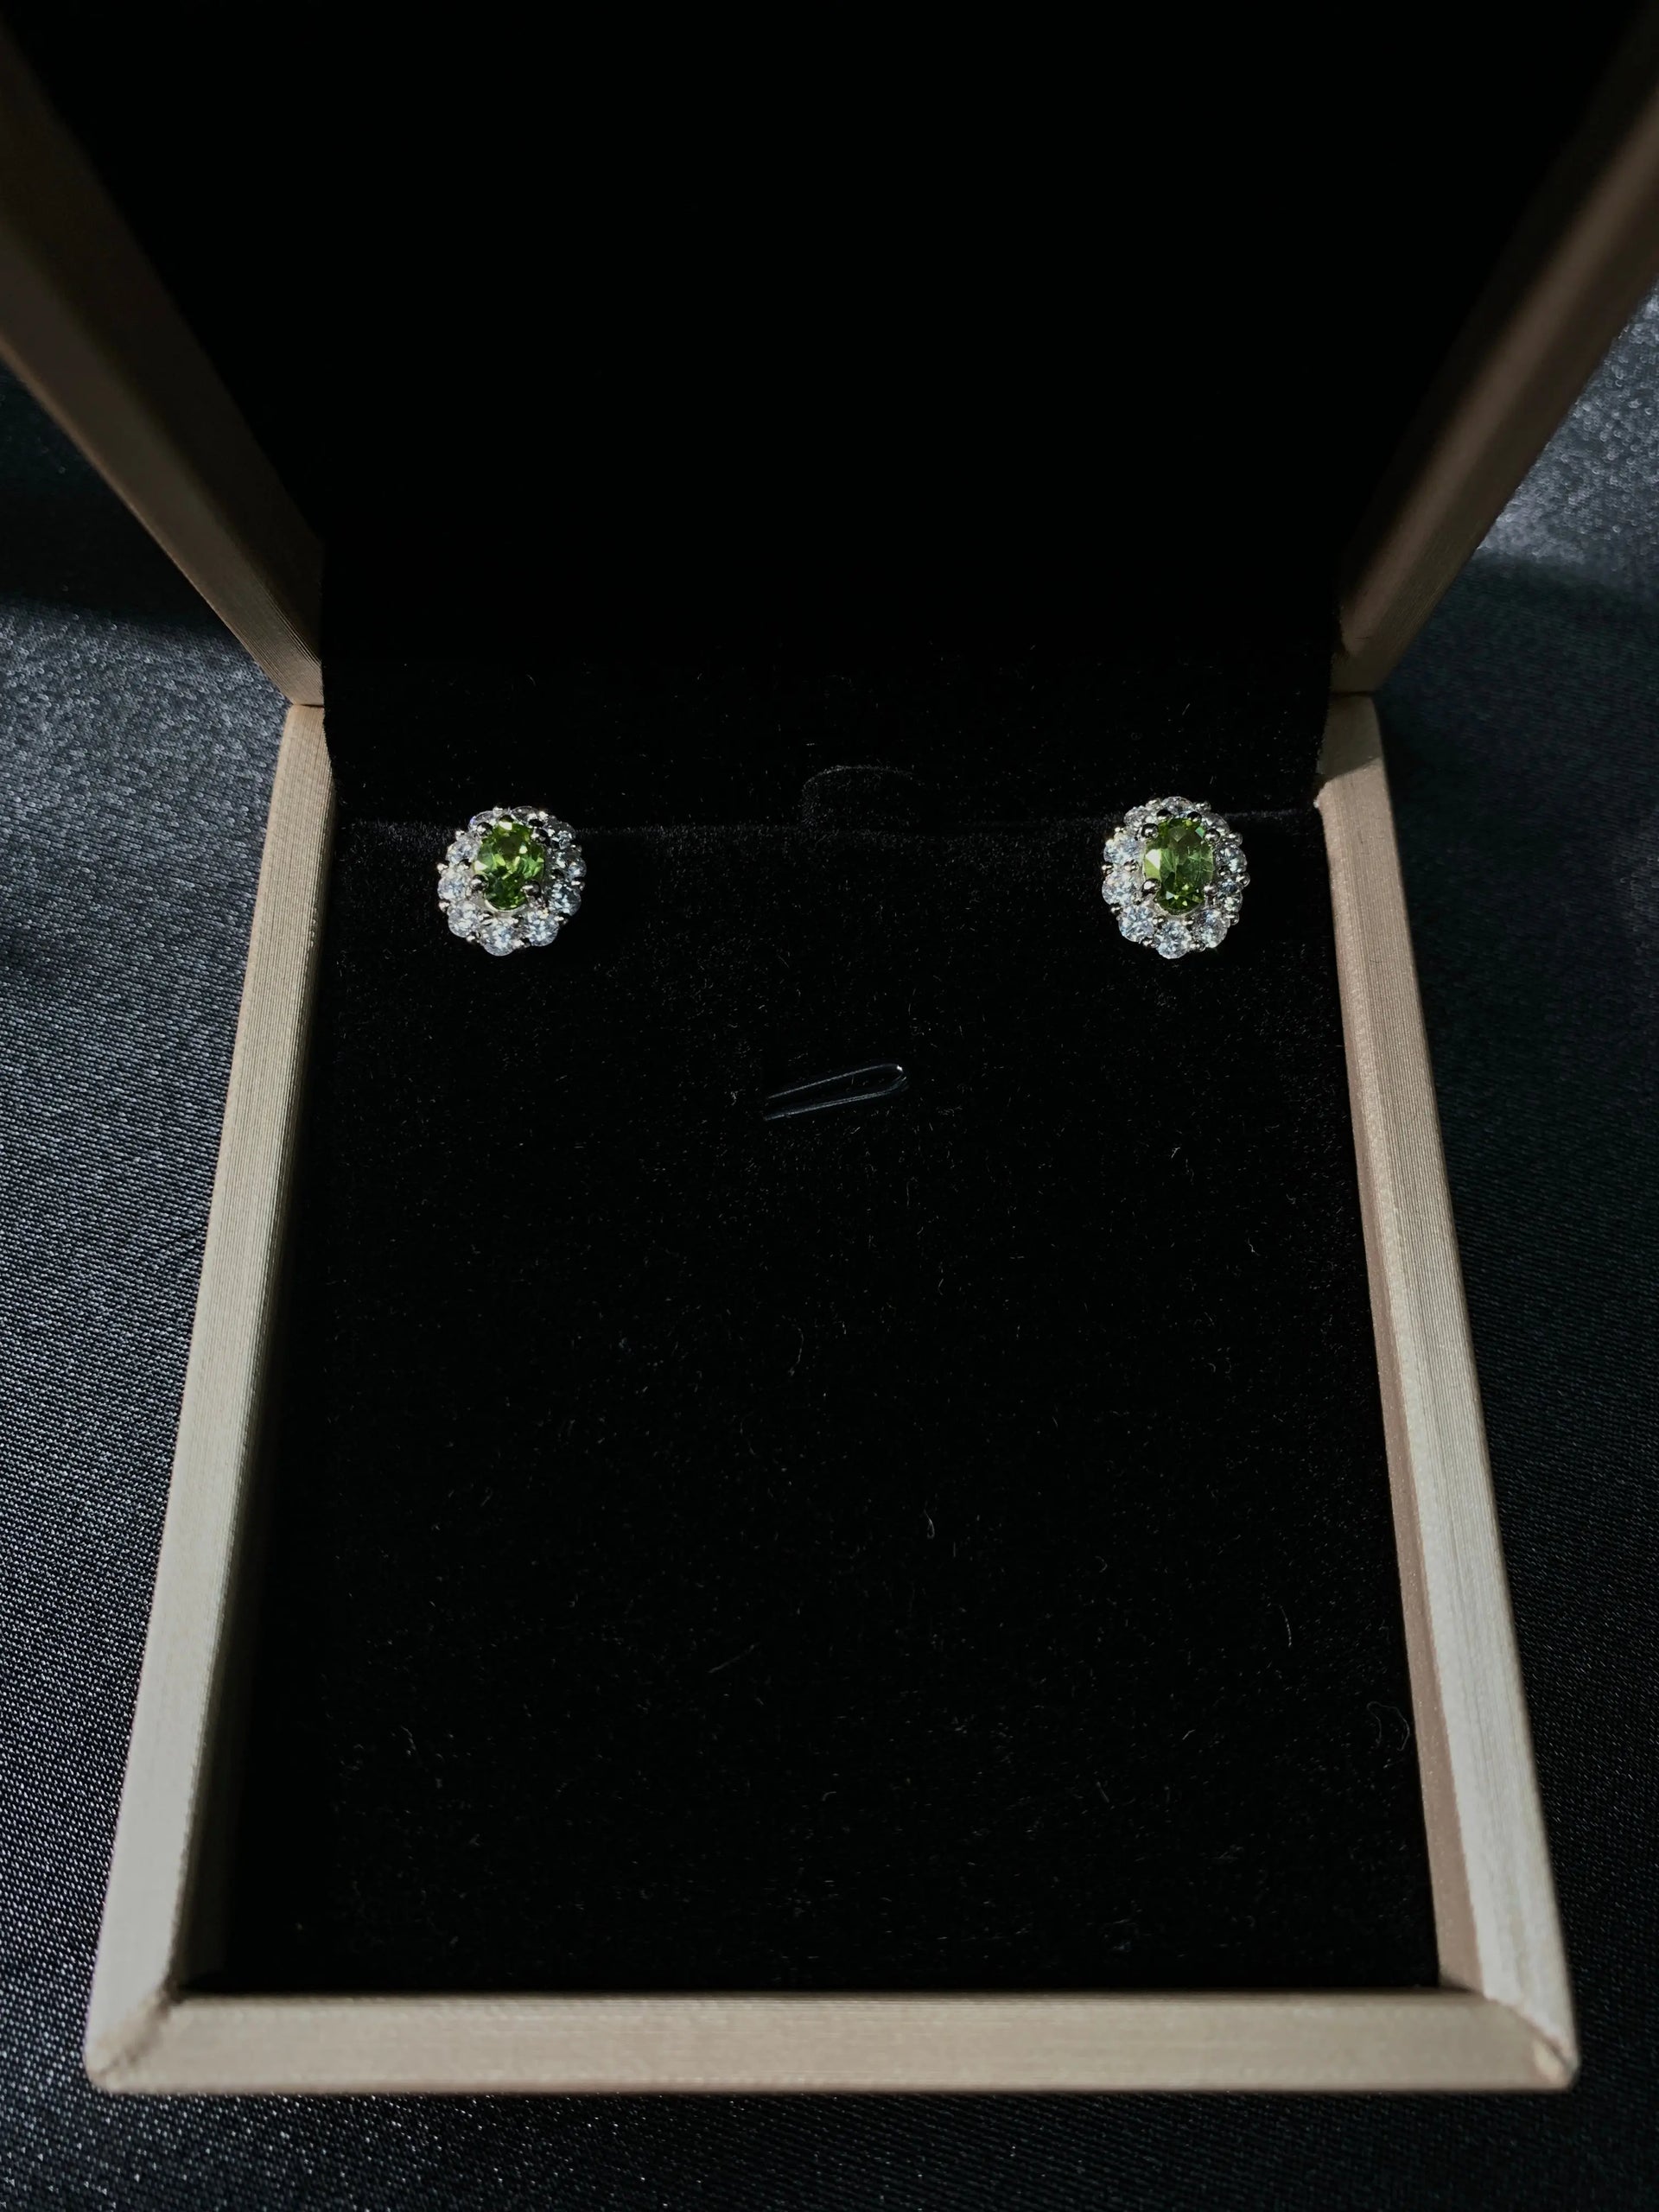 Handmade Natural Peridot Gemstones s925 Silver Earrings studs Yorkerla Jewellery